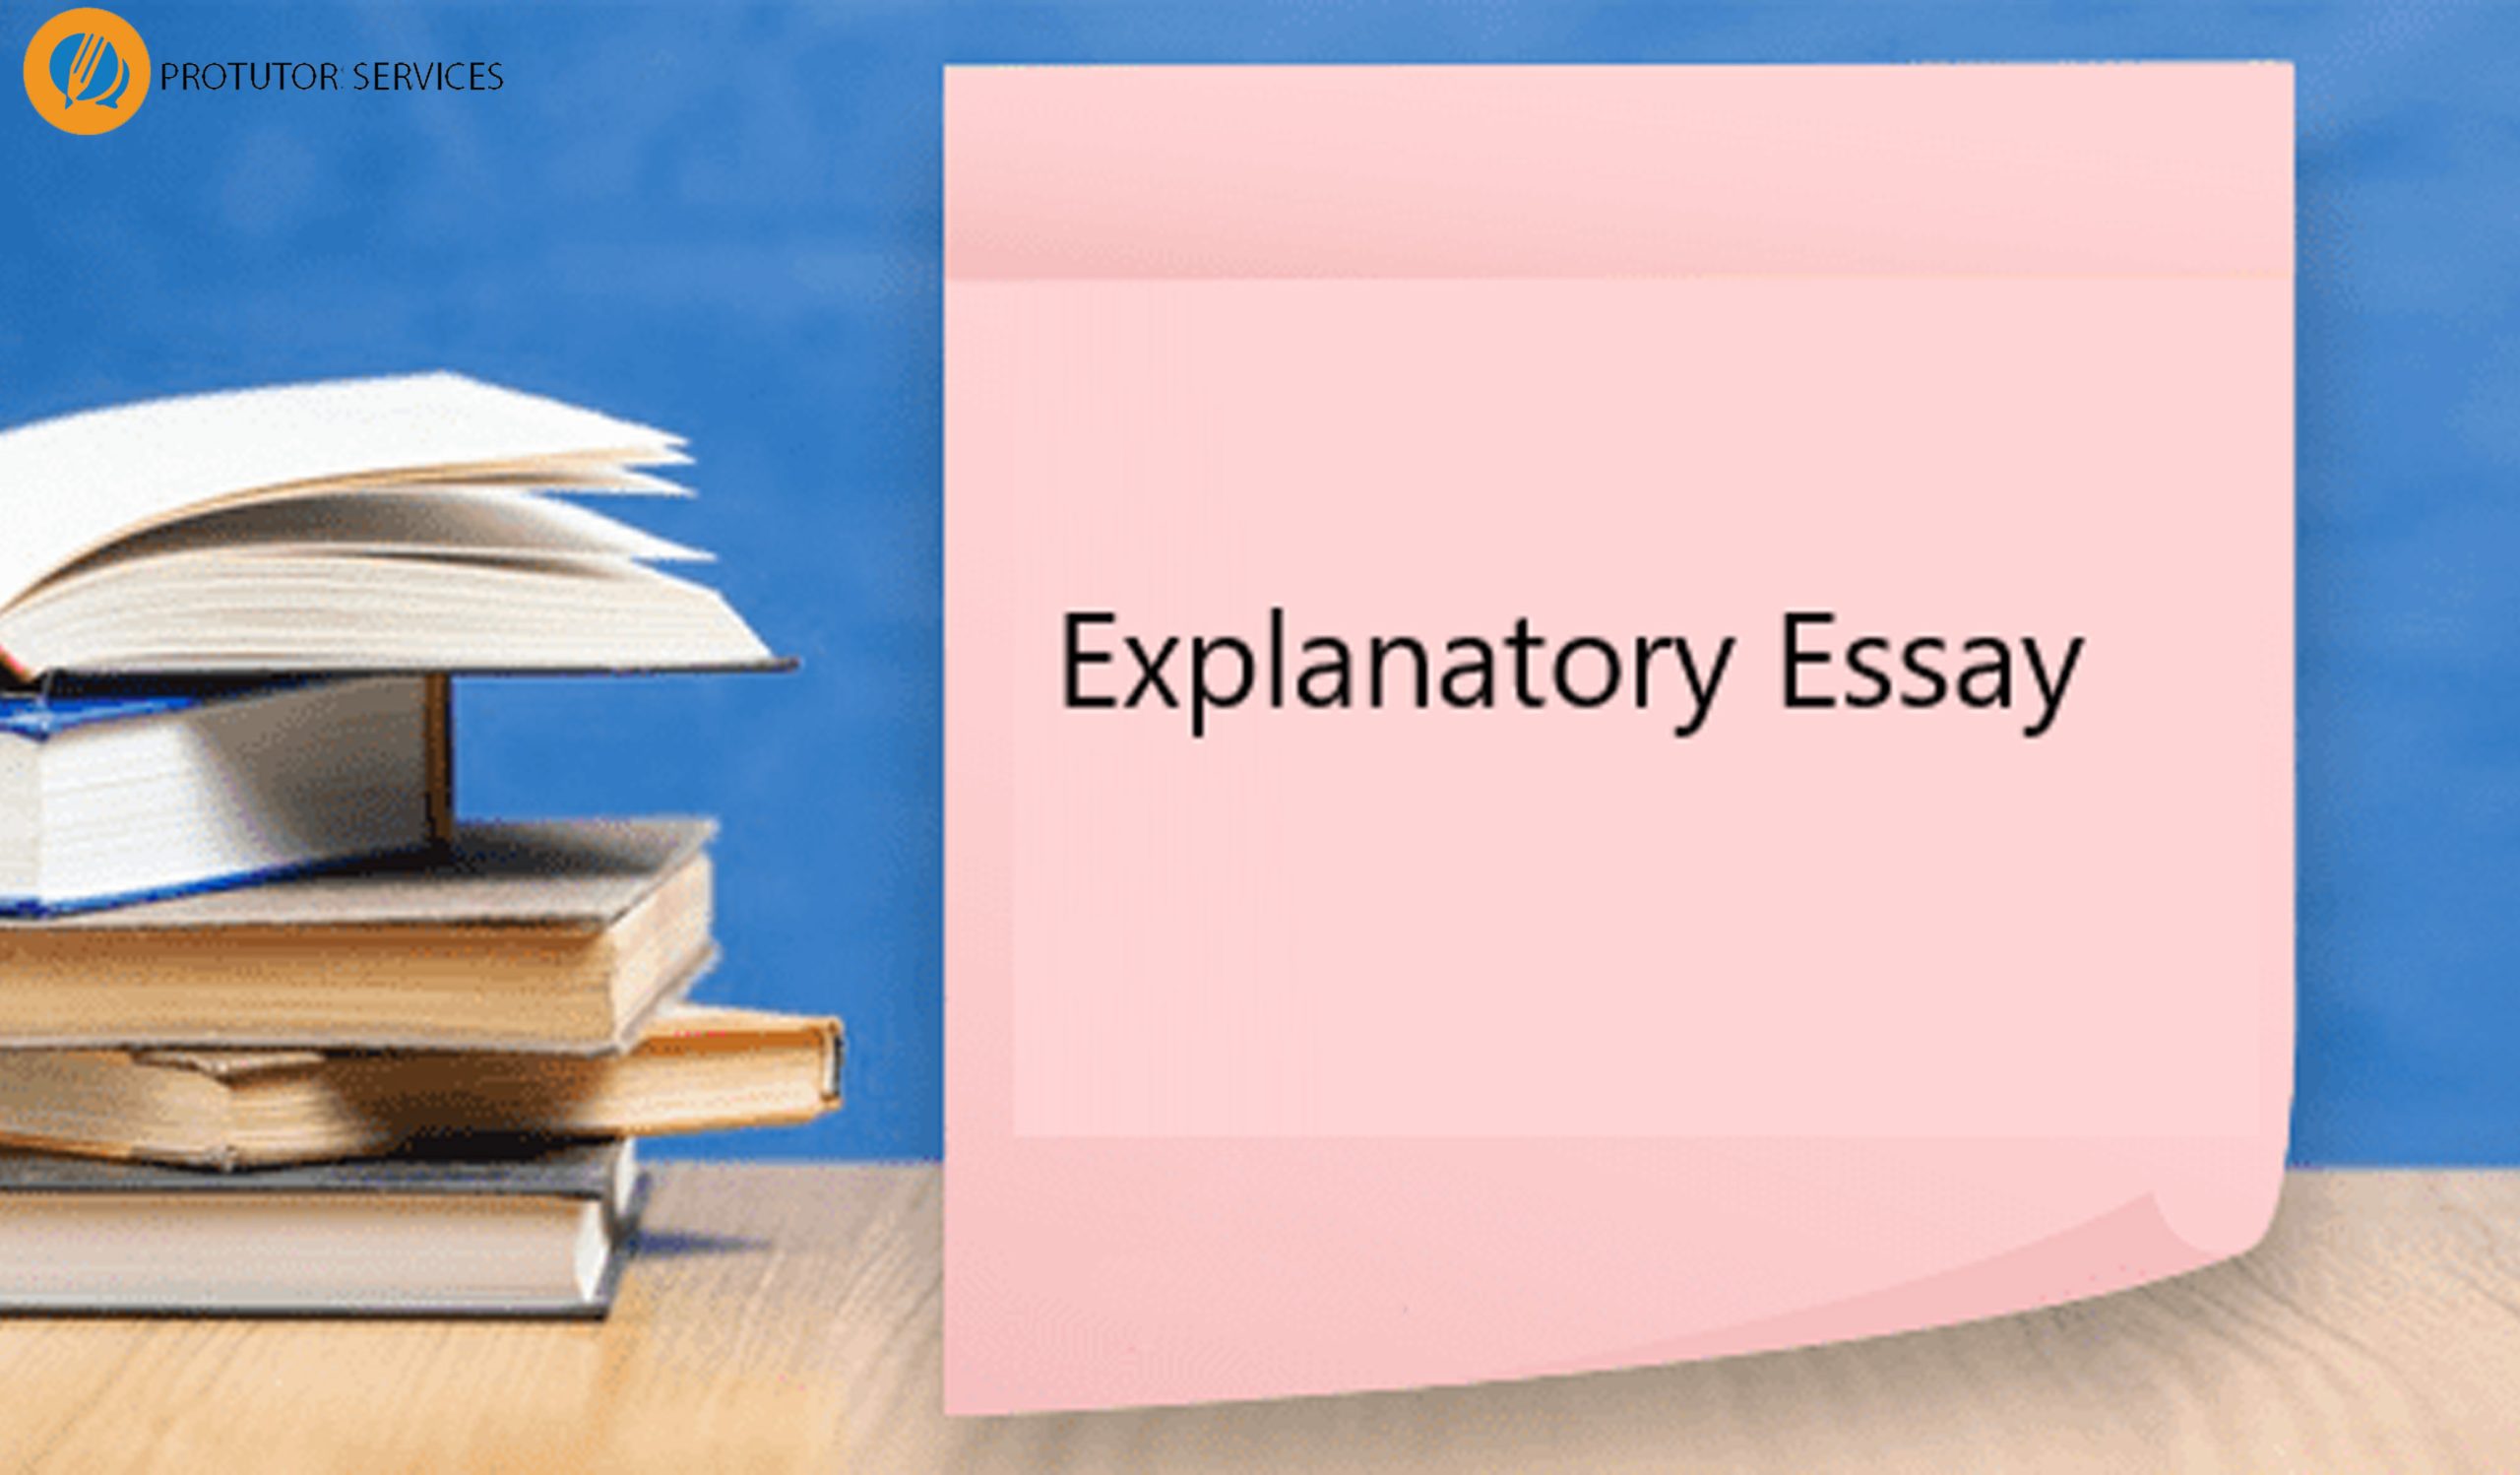 purpose of explanatory essay